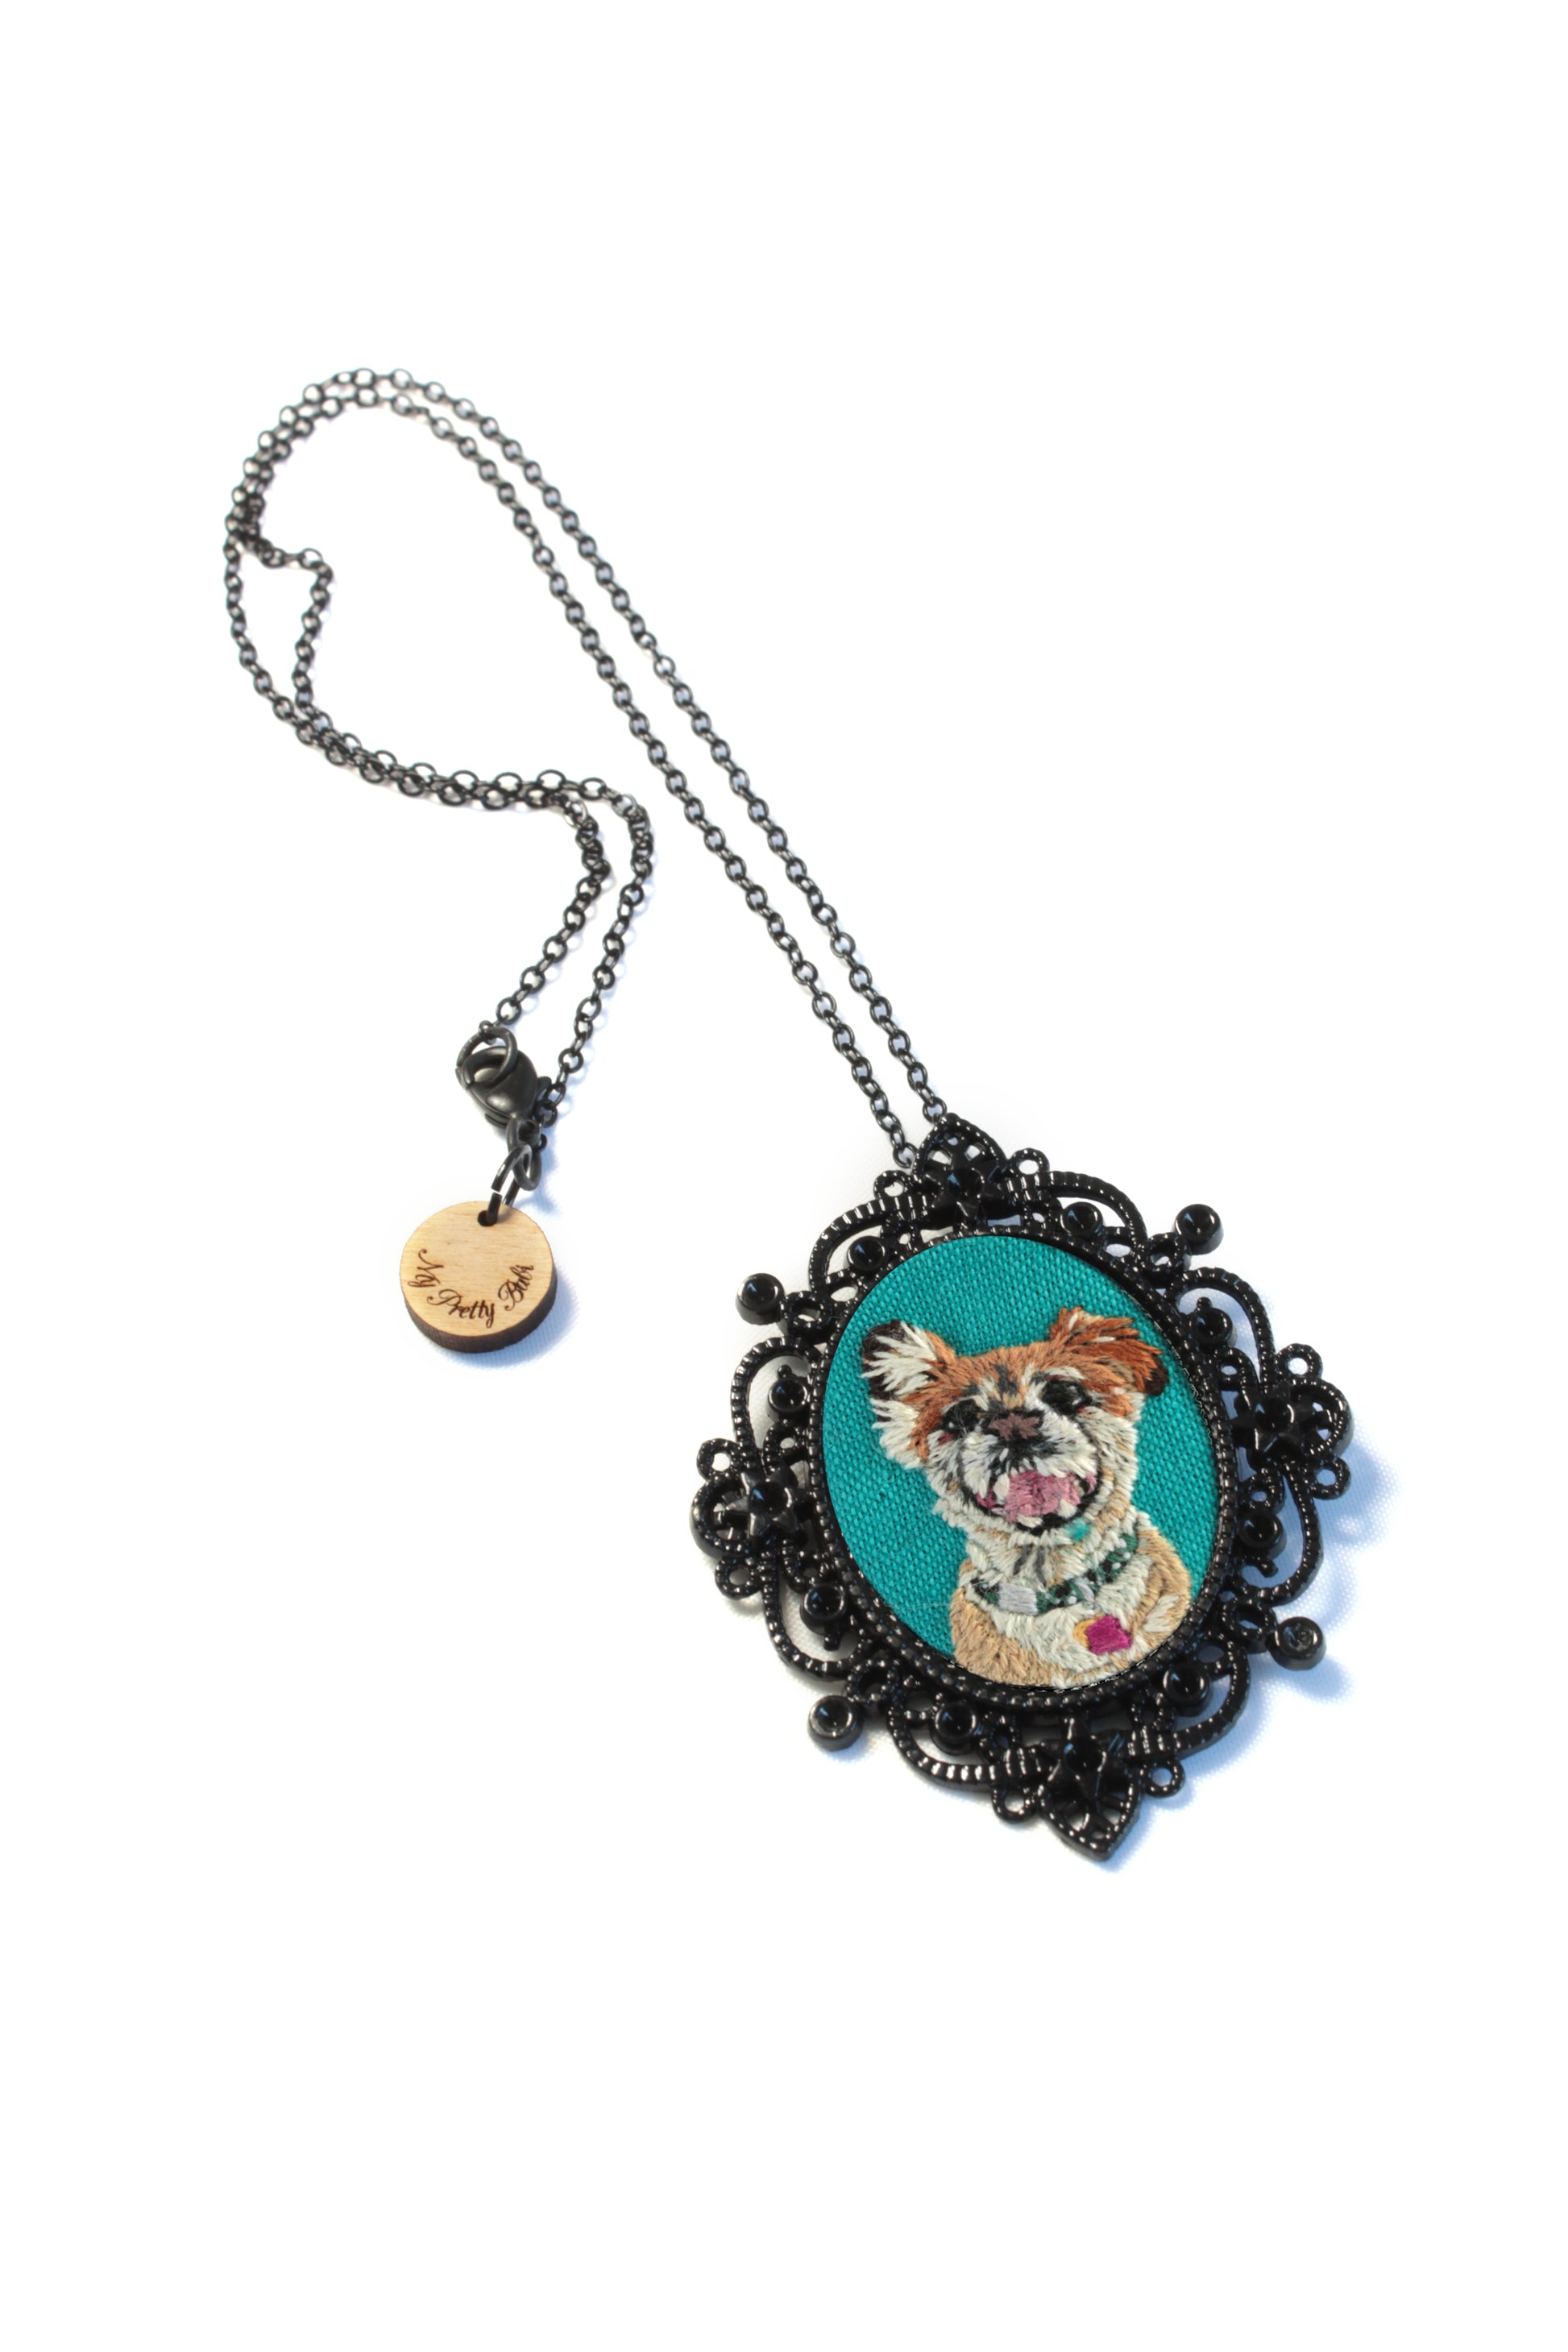 Custom Embroidery Pet Portrait My Pretty Babi Black Oval Pendant Necklace 